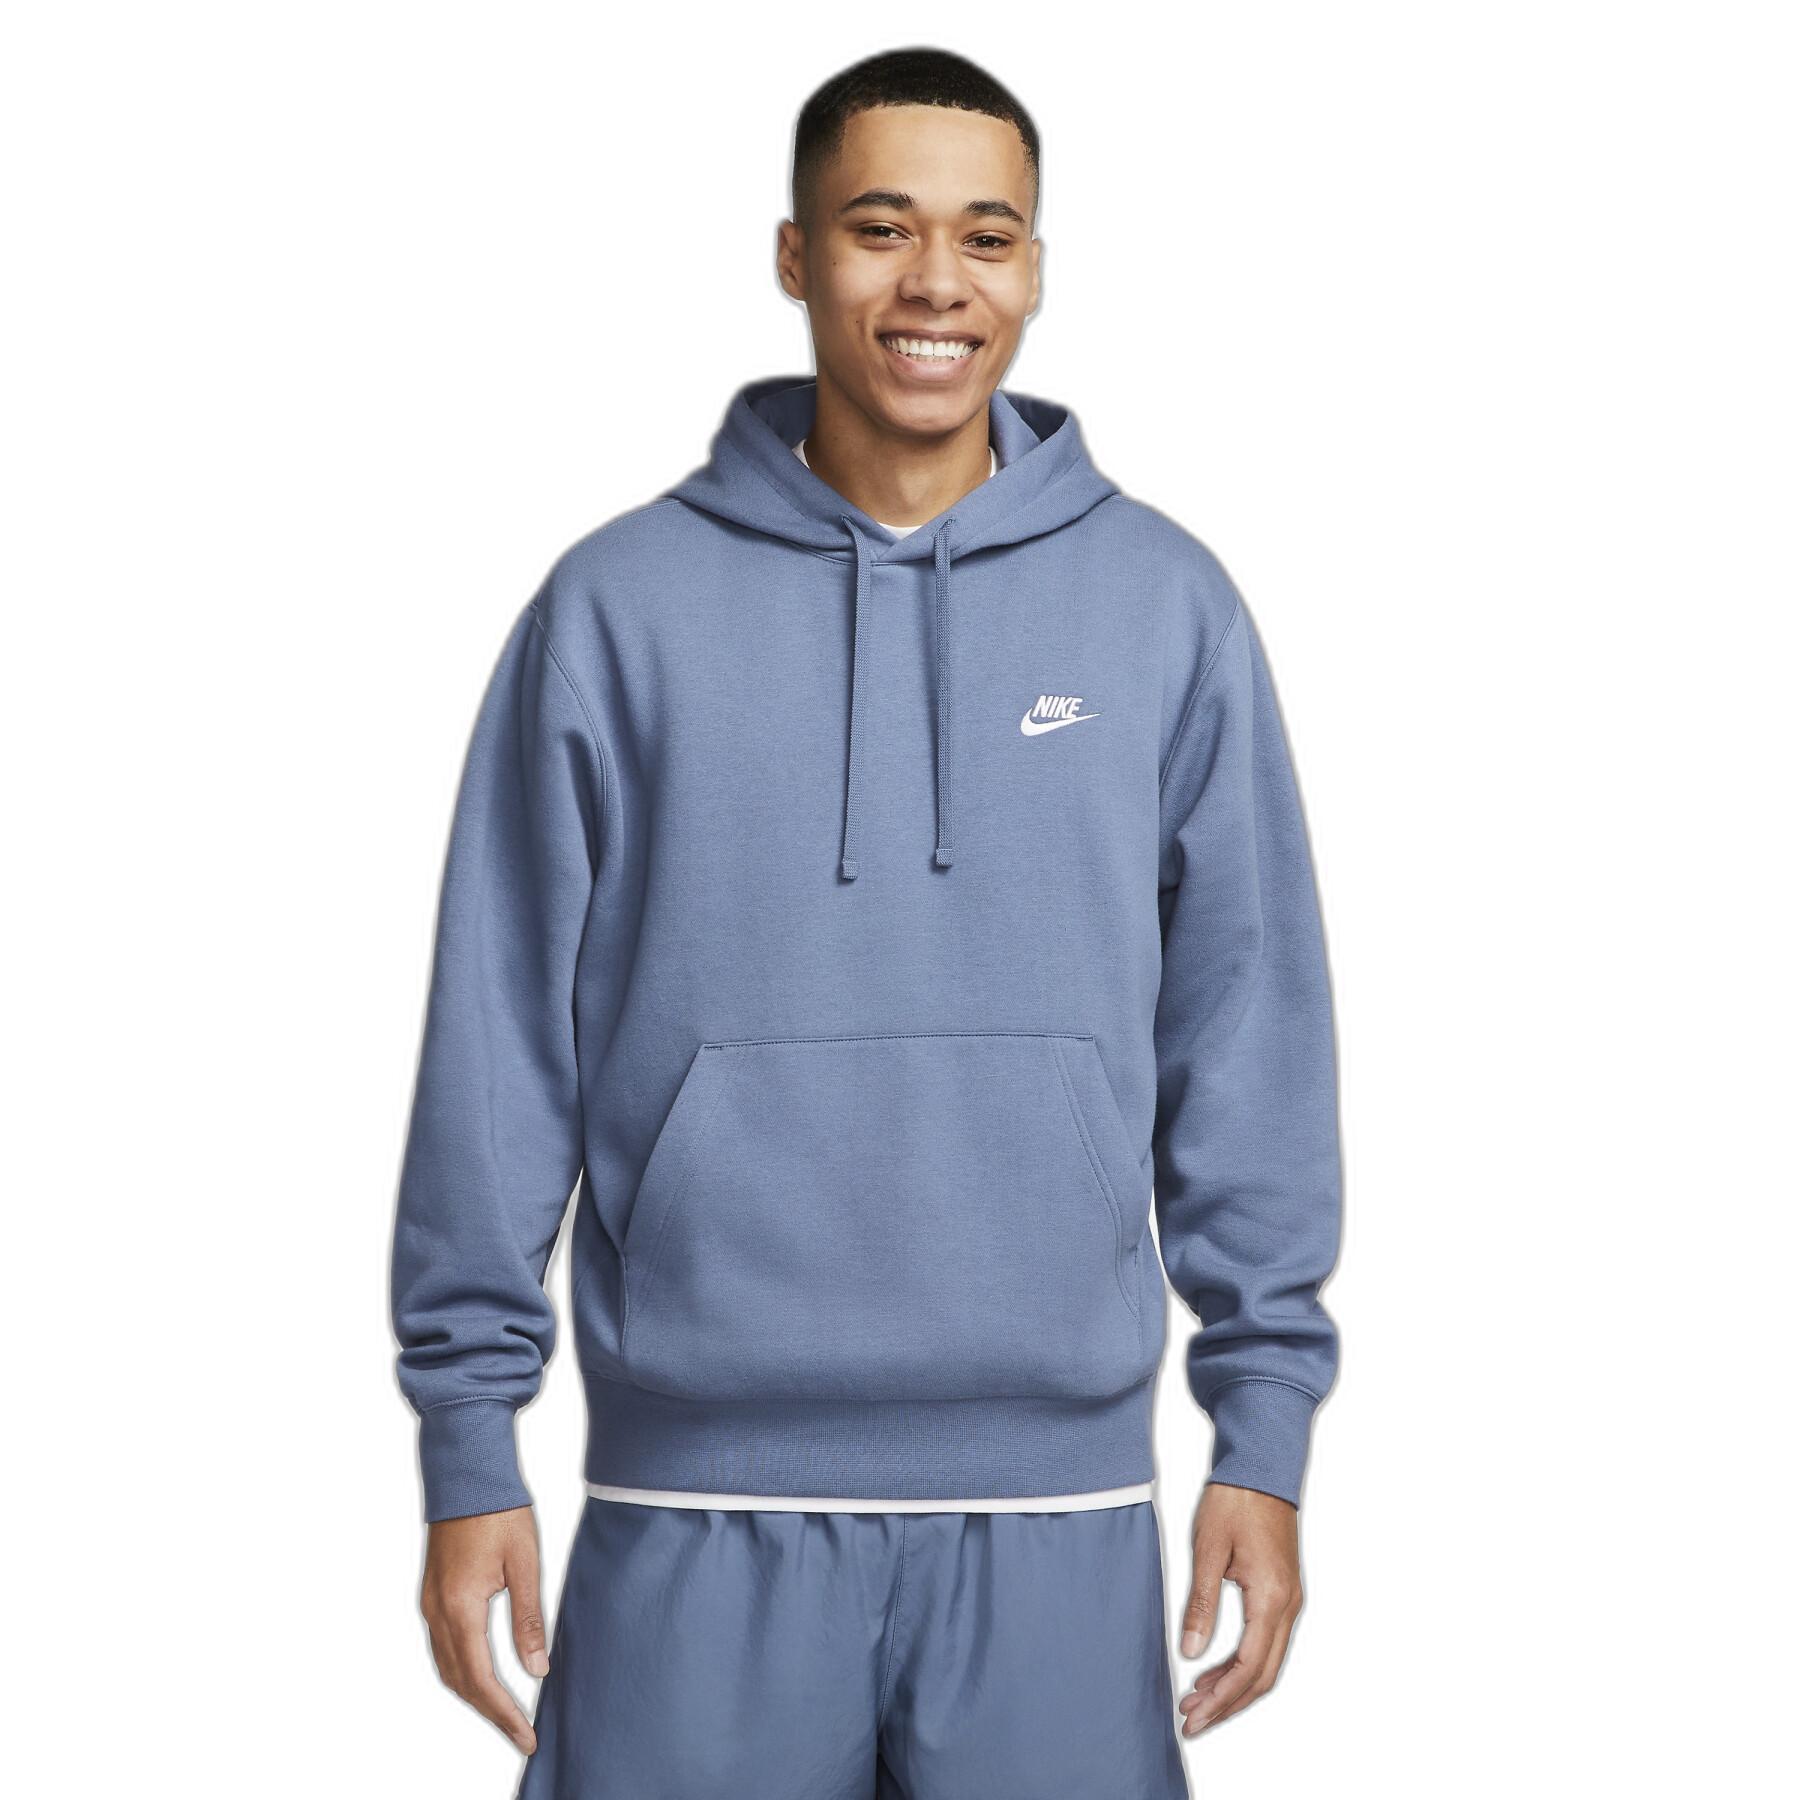 Persoonlijk Overtreffen Tochi boom Sweatshirt hooded fleece Nike Club - Sweatshirts - Men's clothing -  Lifestyle